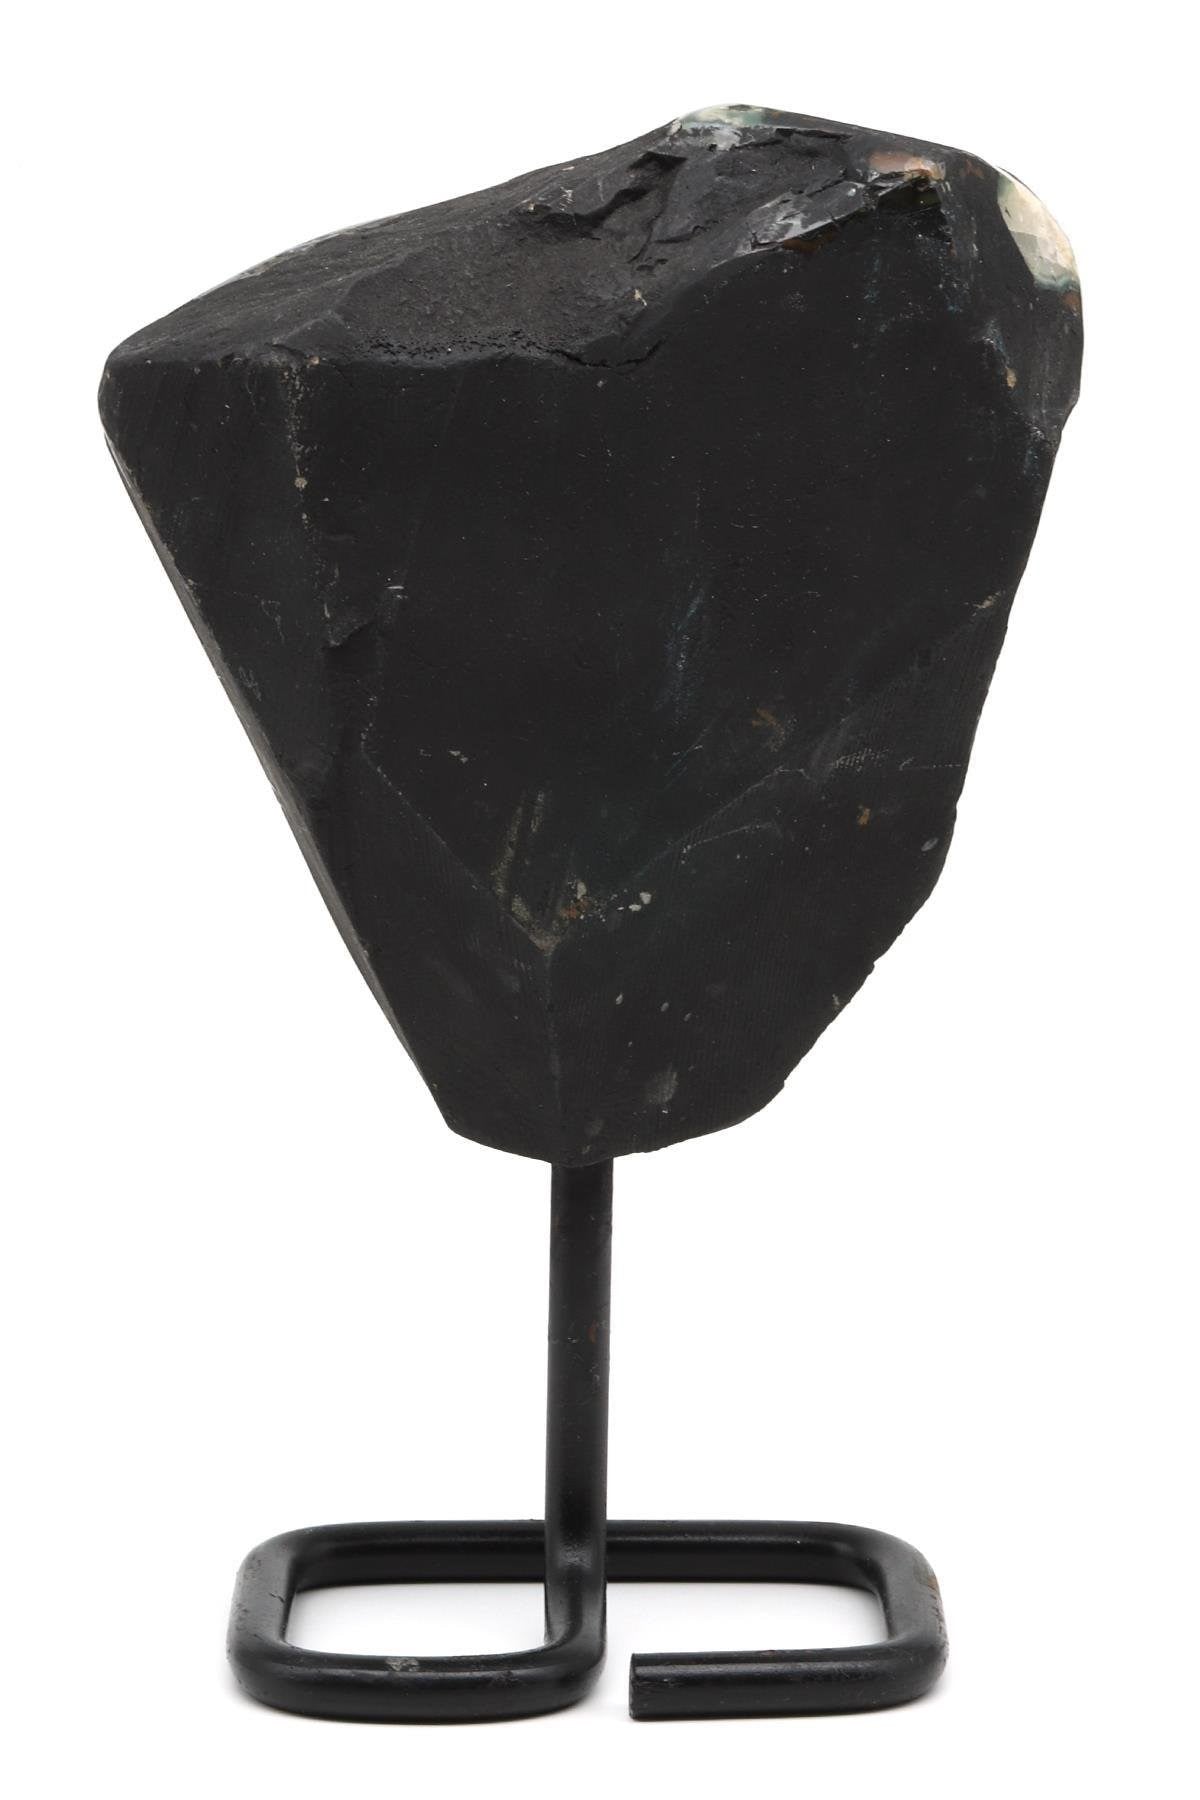 Brazilian Amethyst Geode on Metal Stand